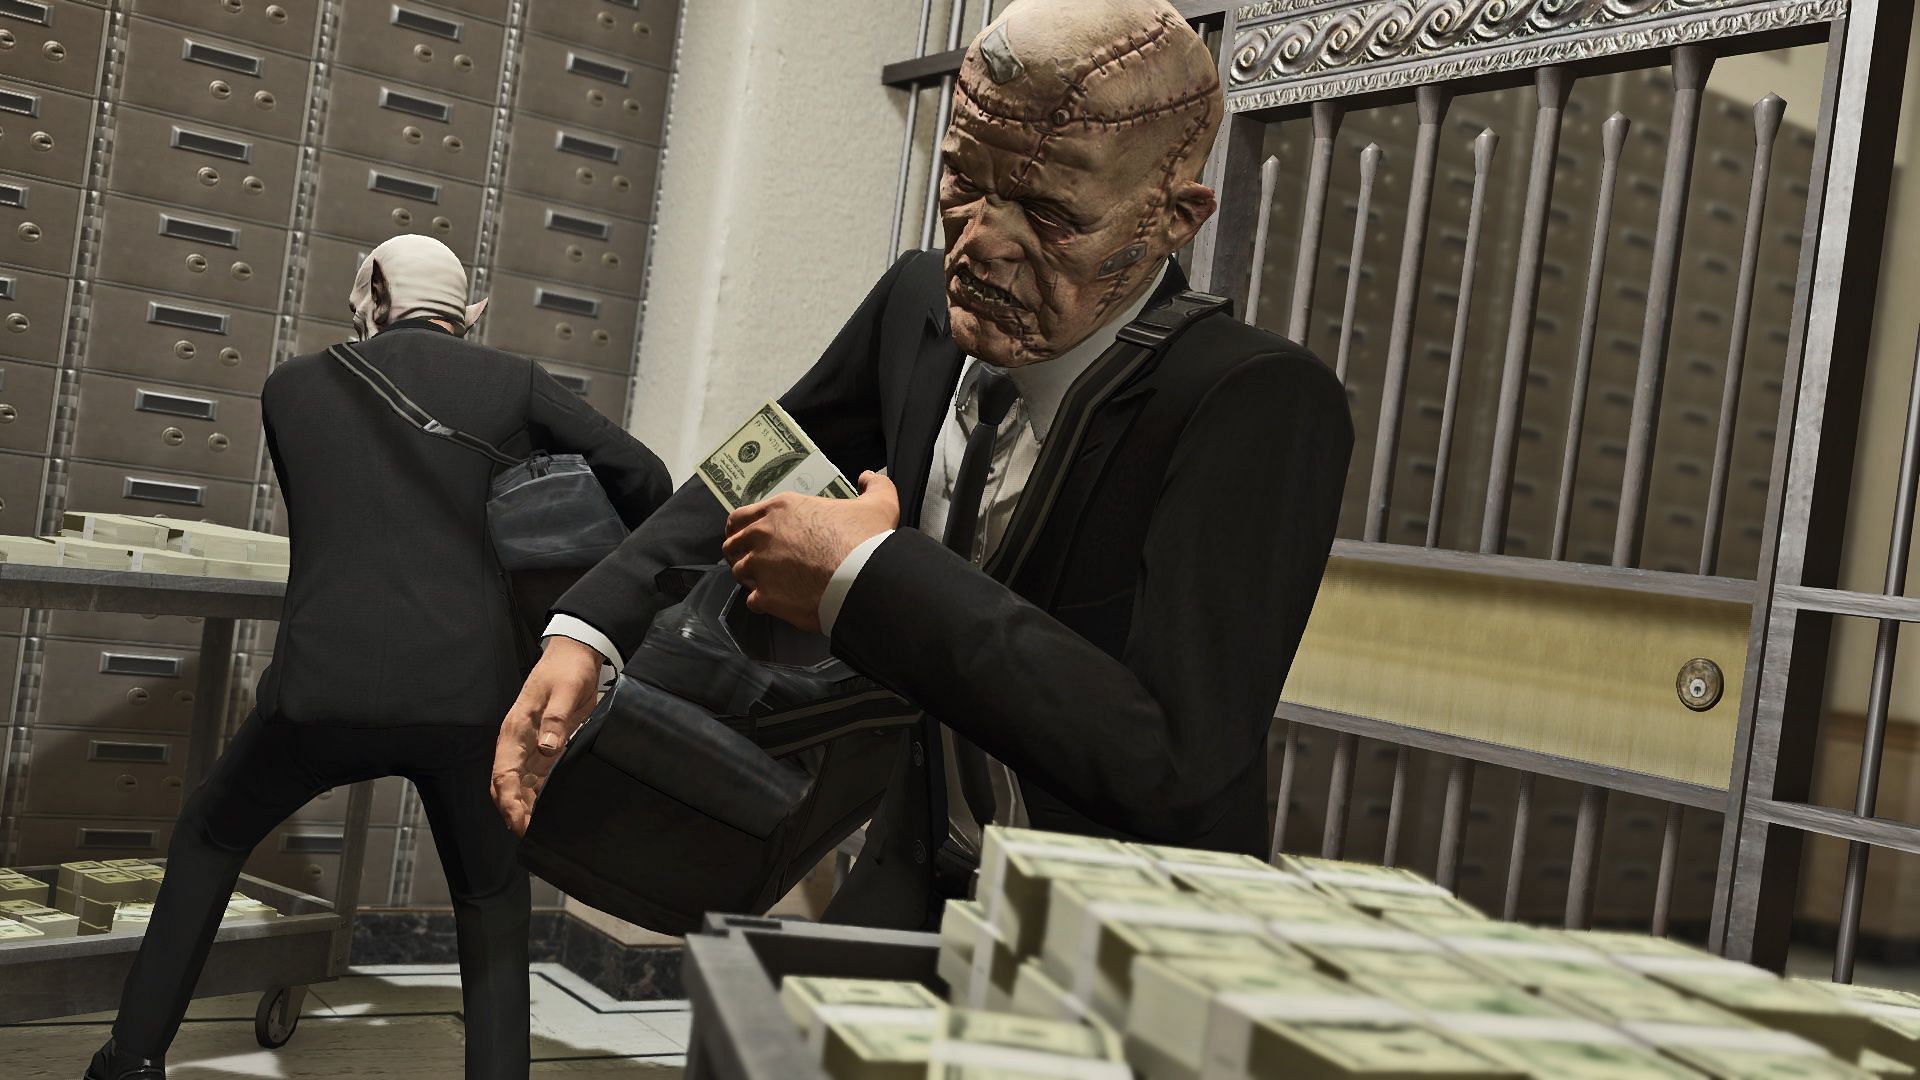 GTA 5 Online has so many ways to make millions of dollars